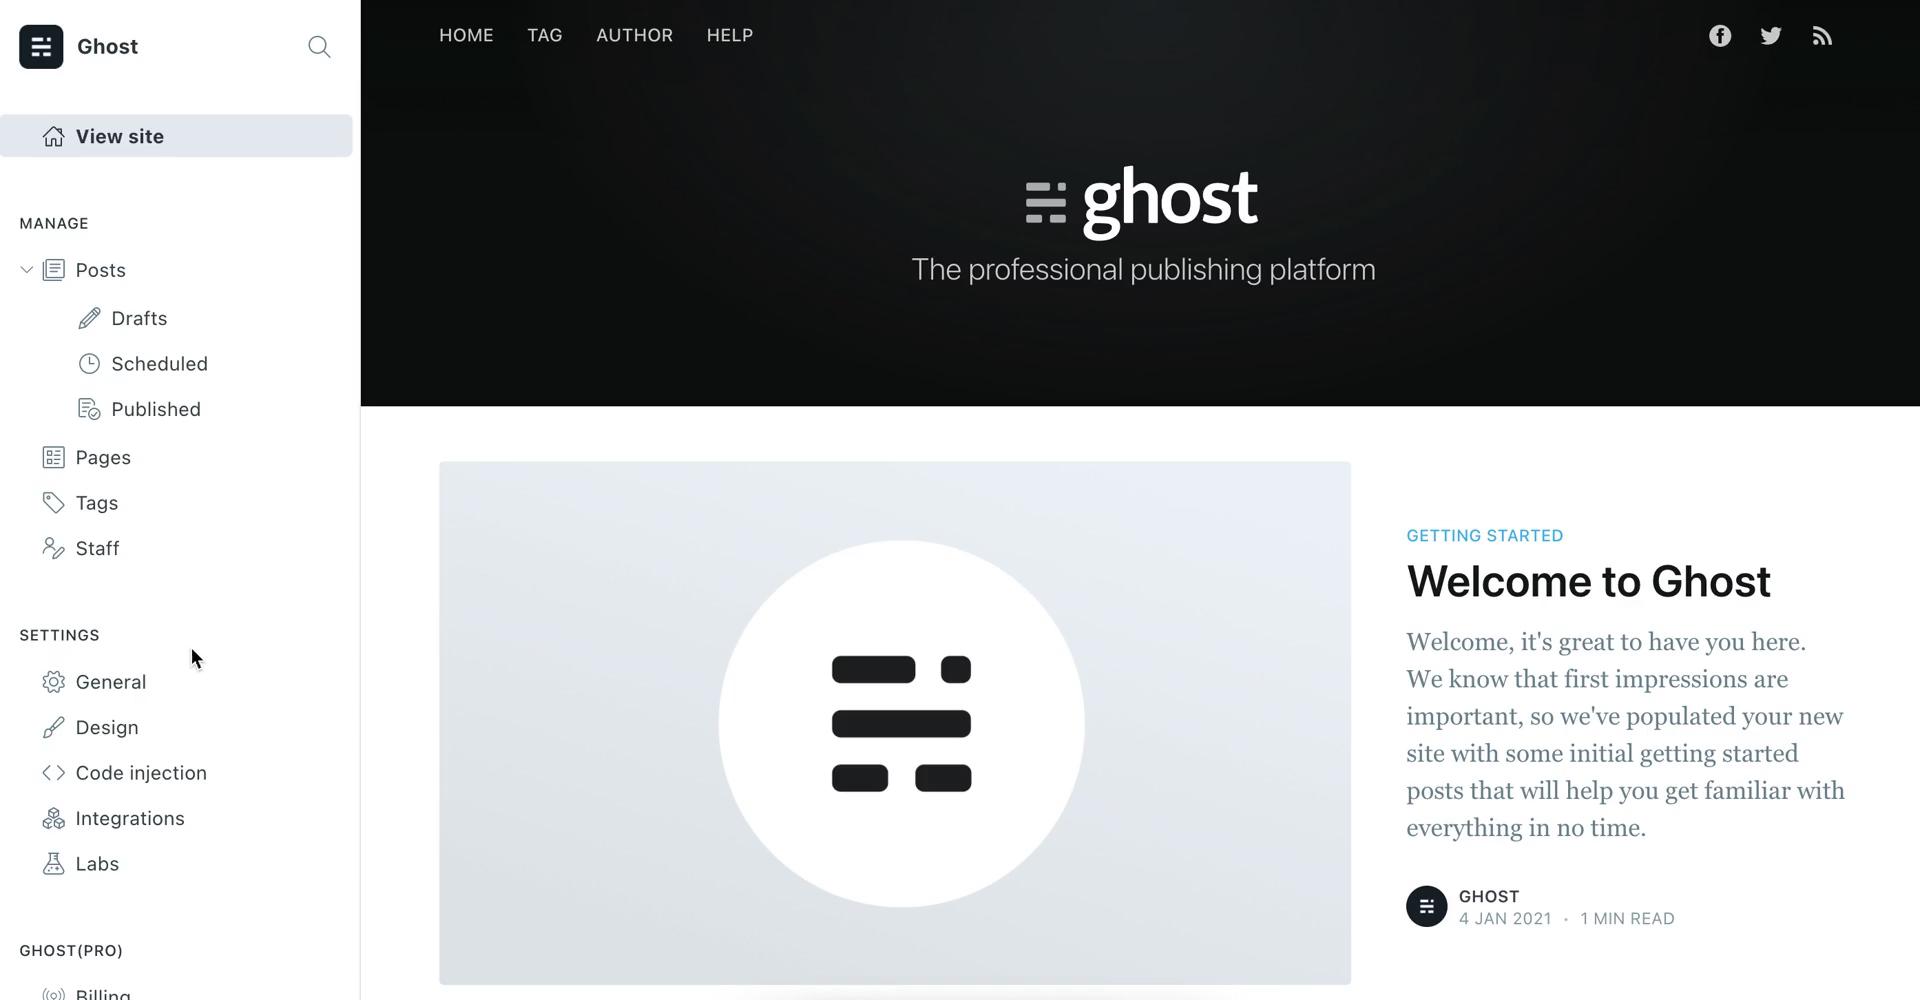 Customization settings on Ghost video screenshot